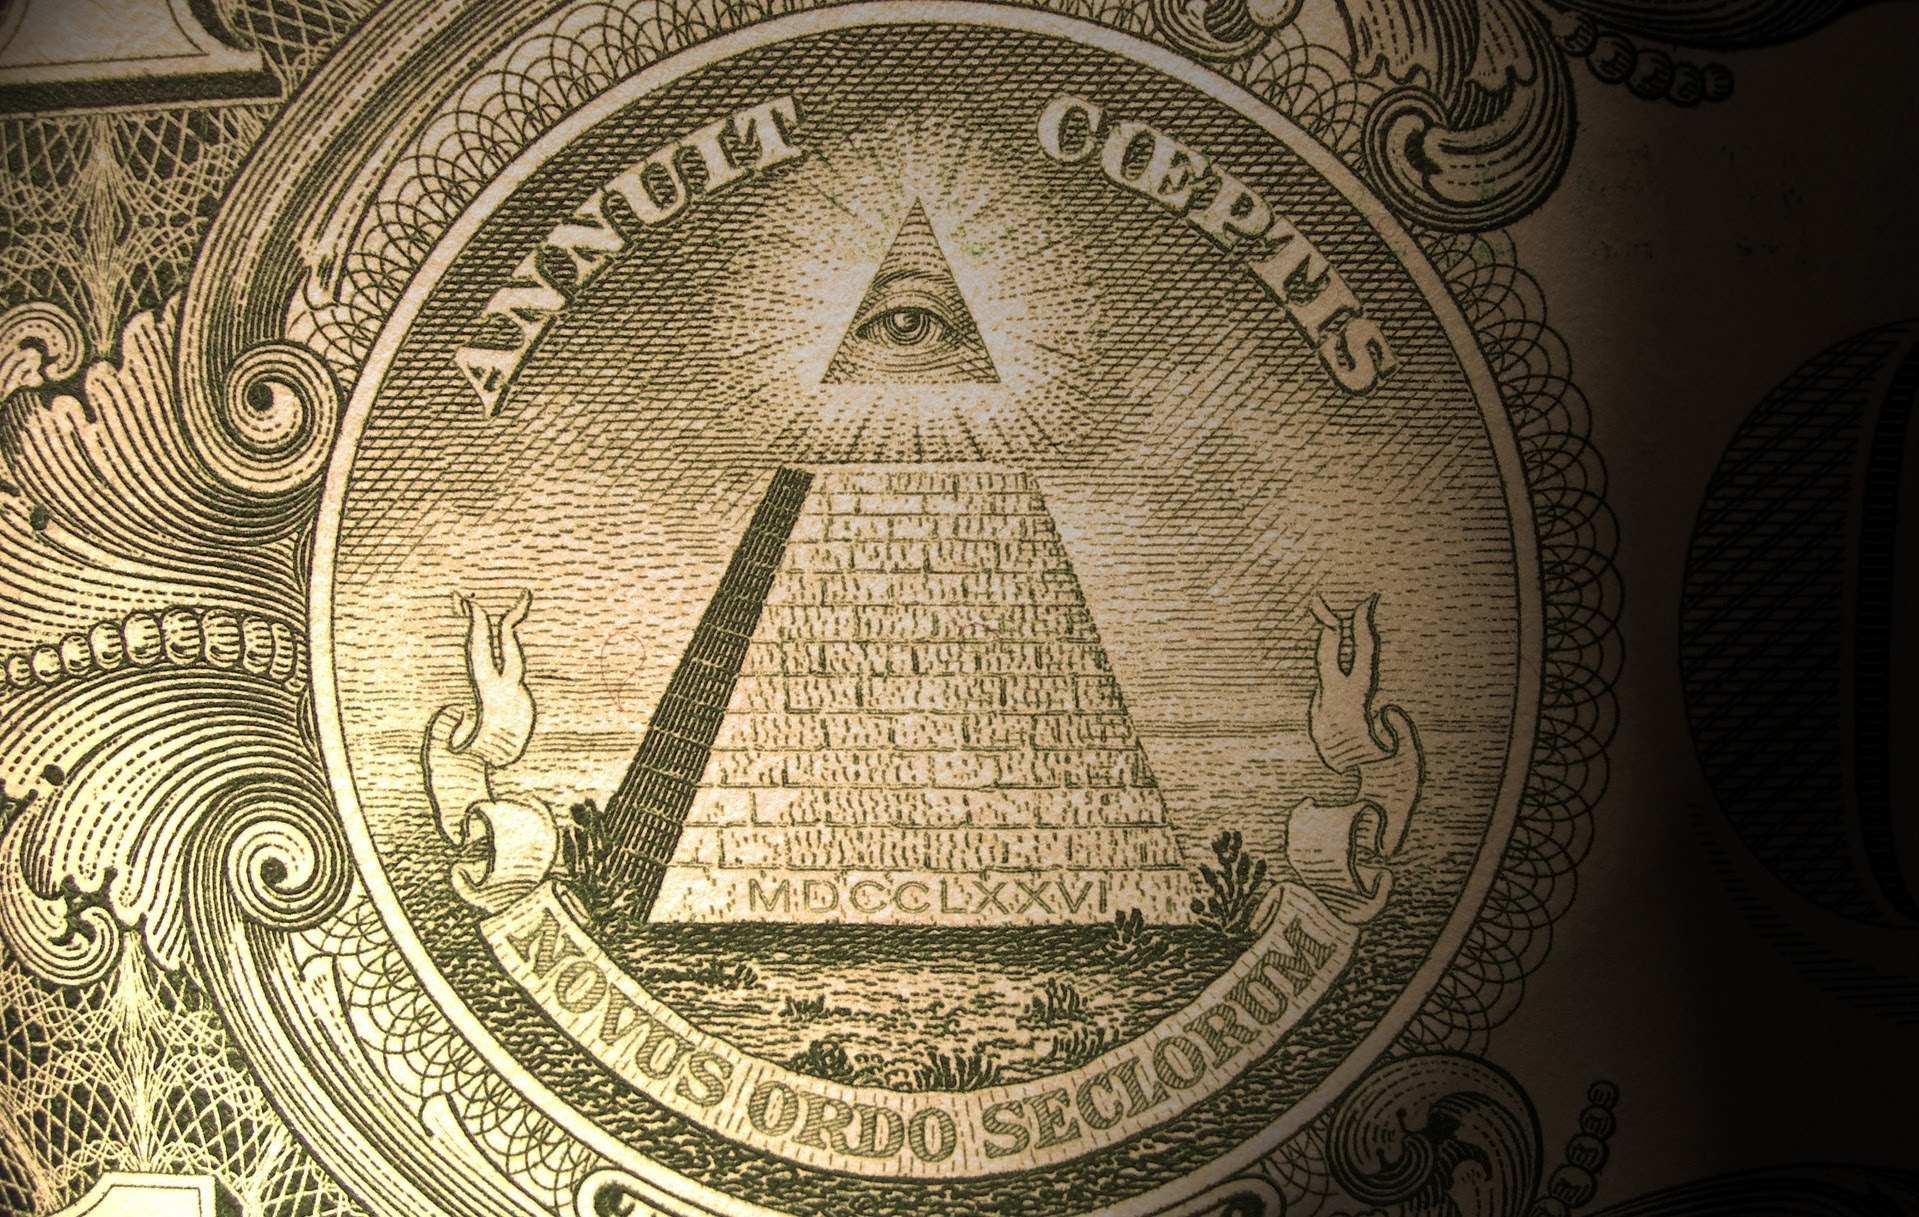 Illuminati Celebrity Satanism Exposed!! 2016 [Full Documentary]